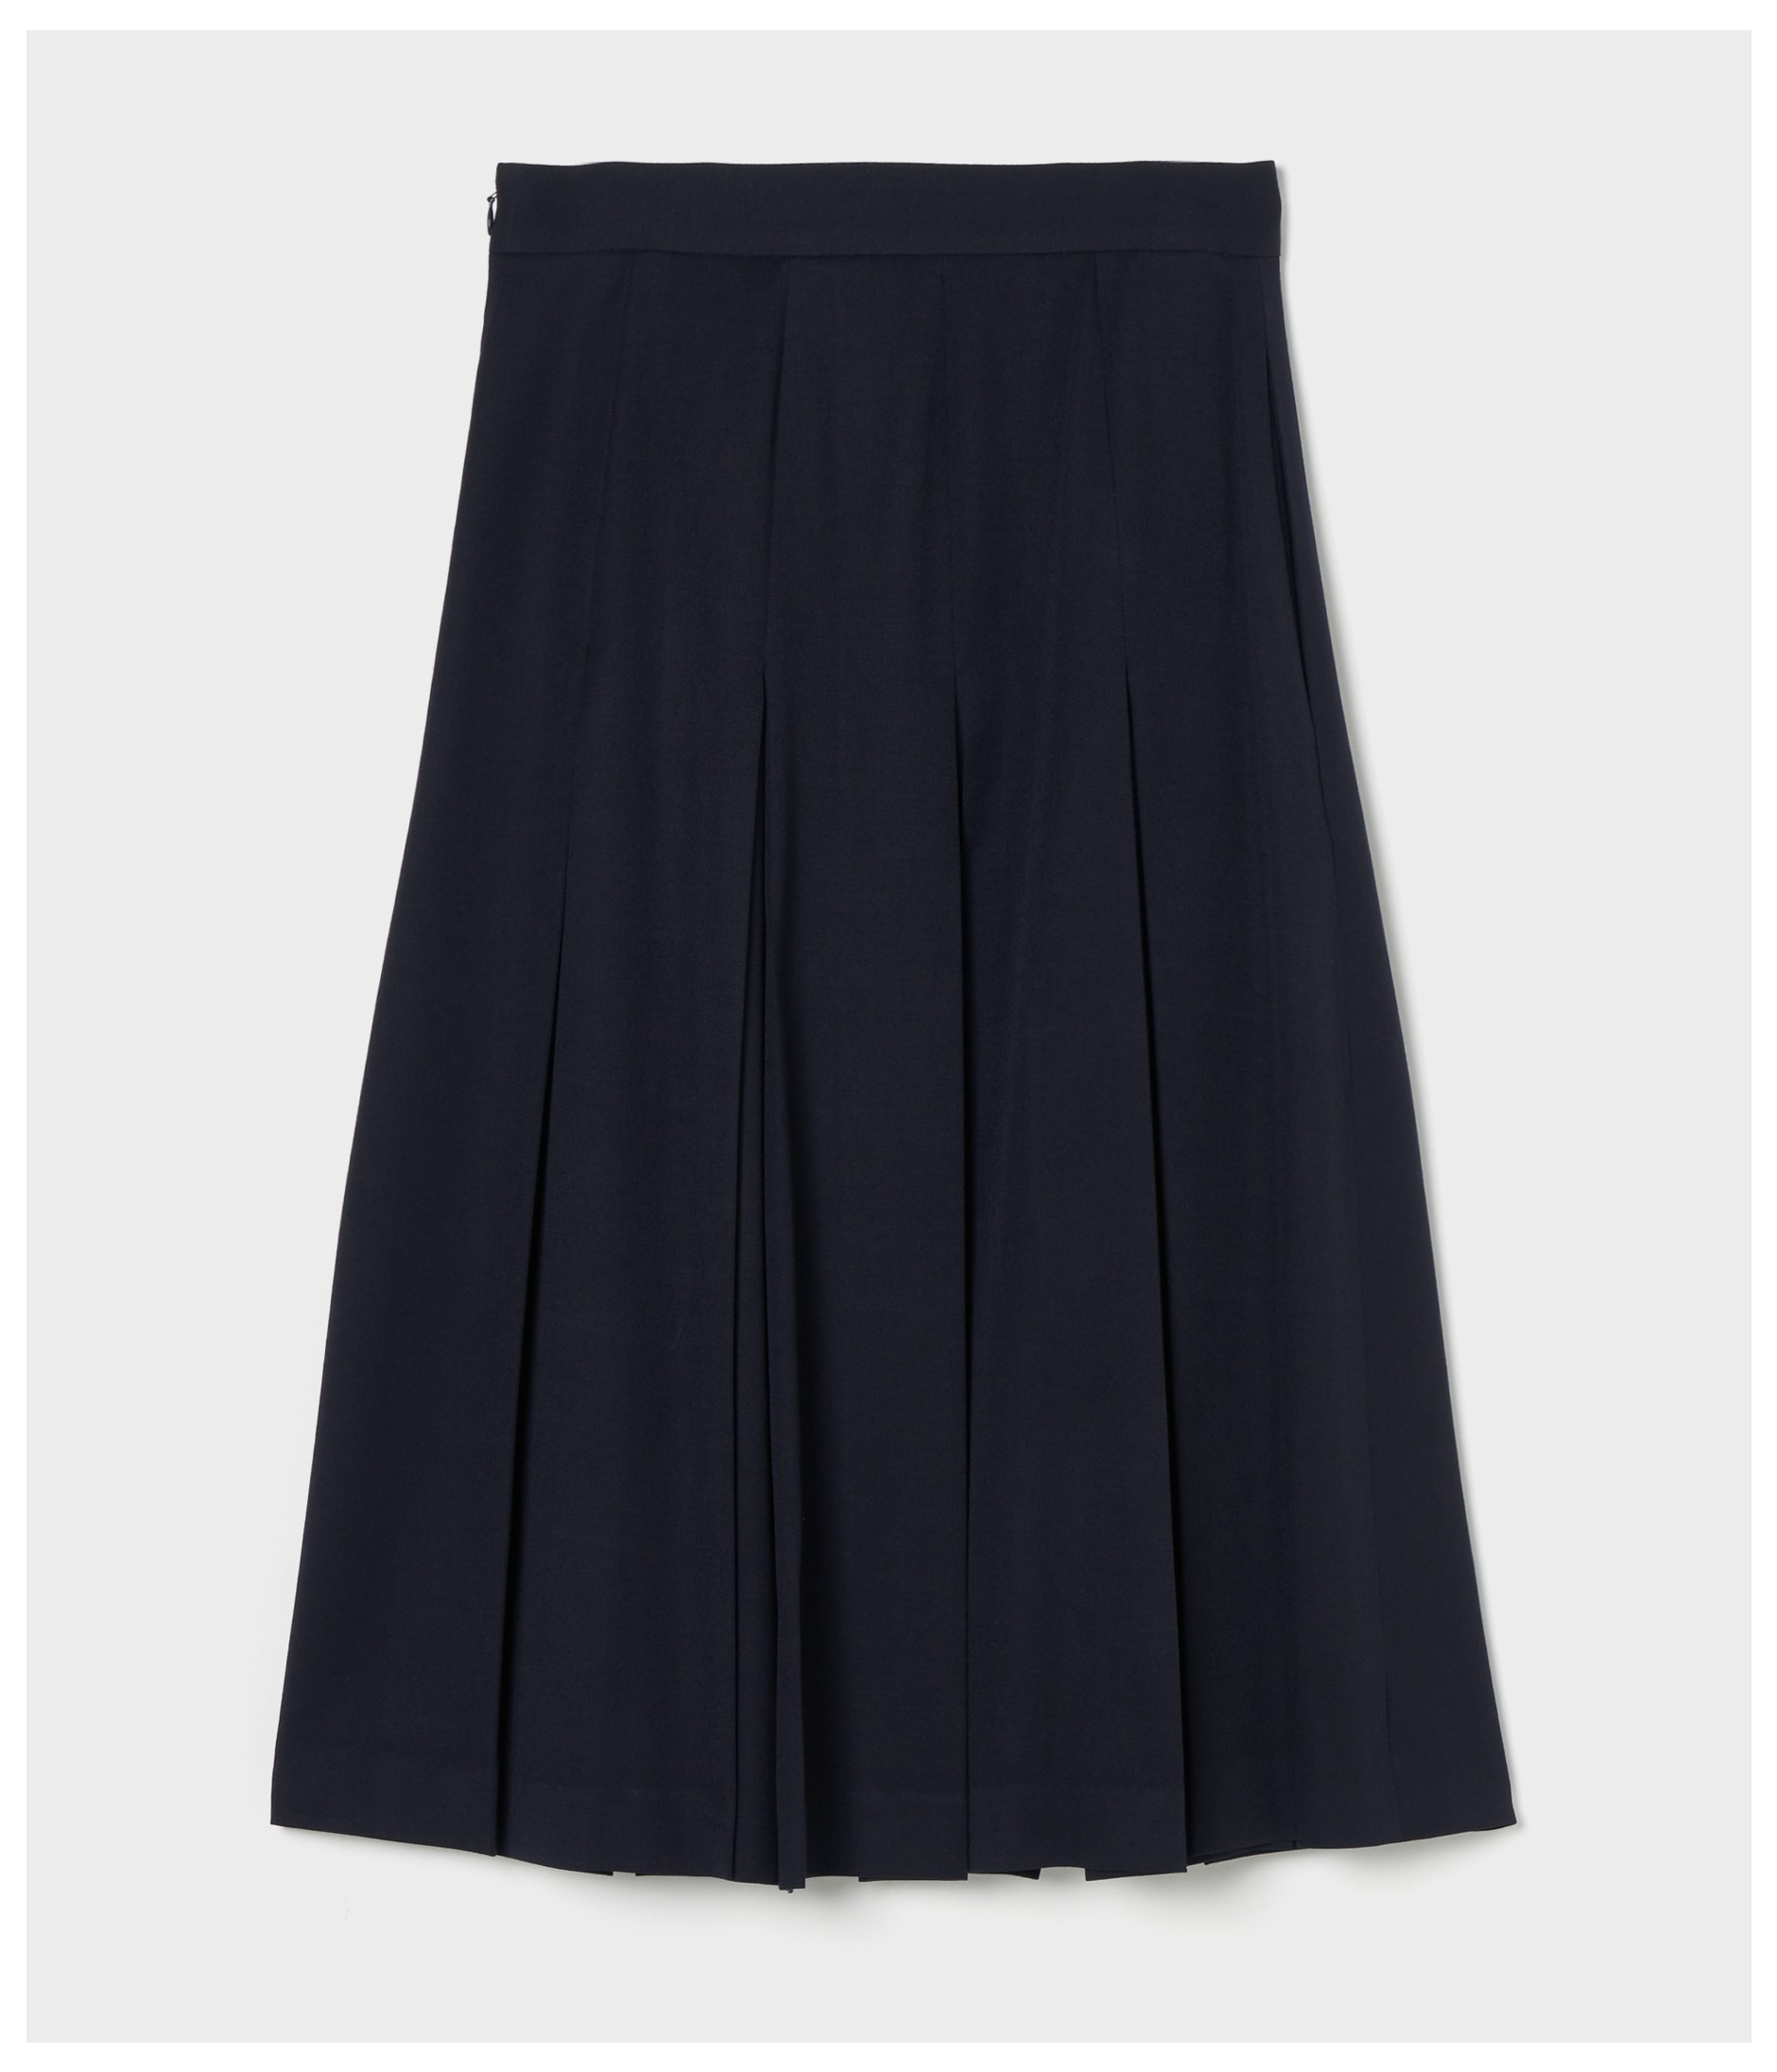 2020最新型 高品質 Black pleats skirt - 通販 - etheriawellness.com